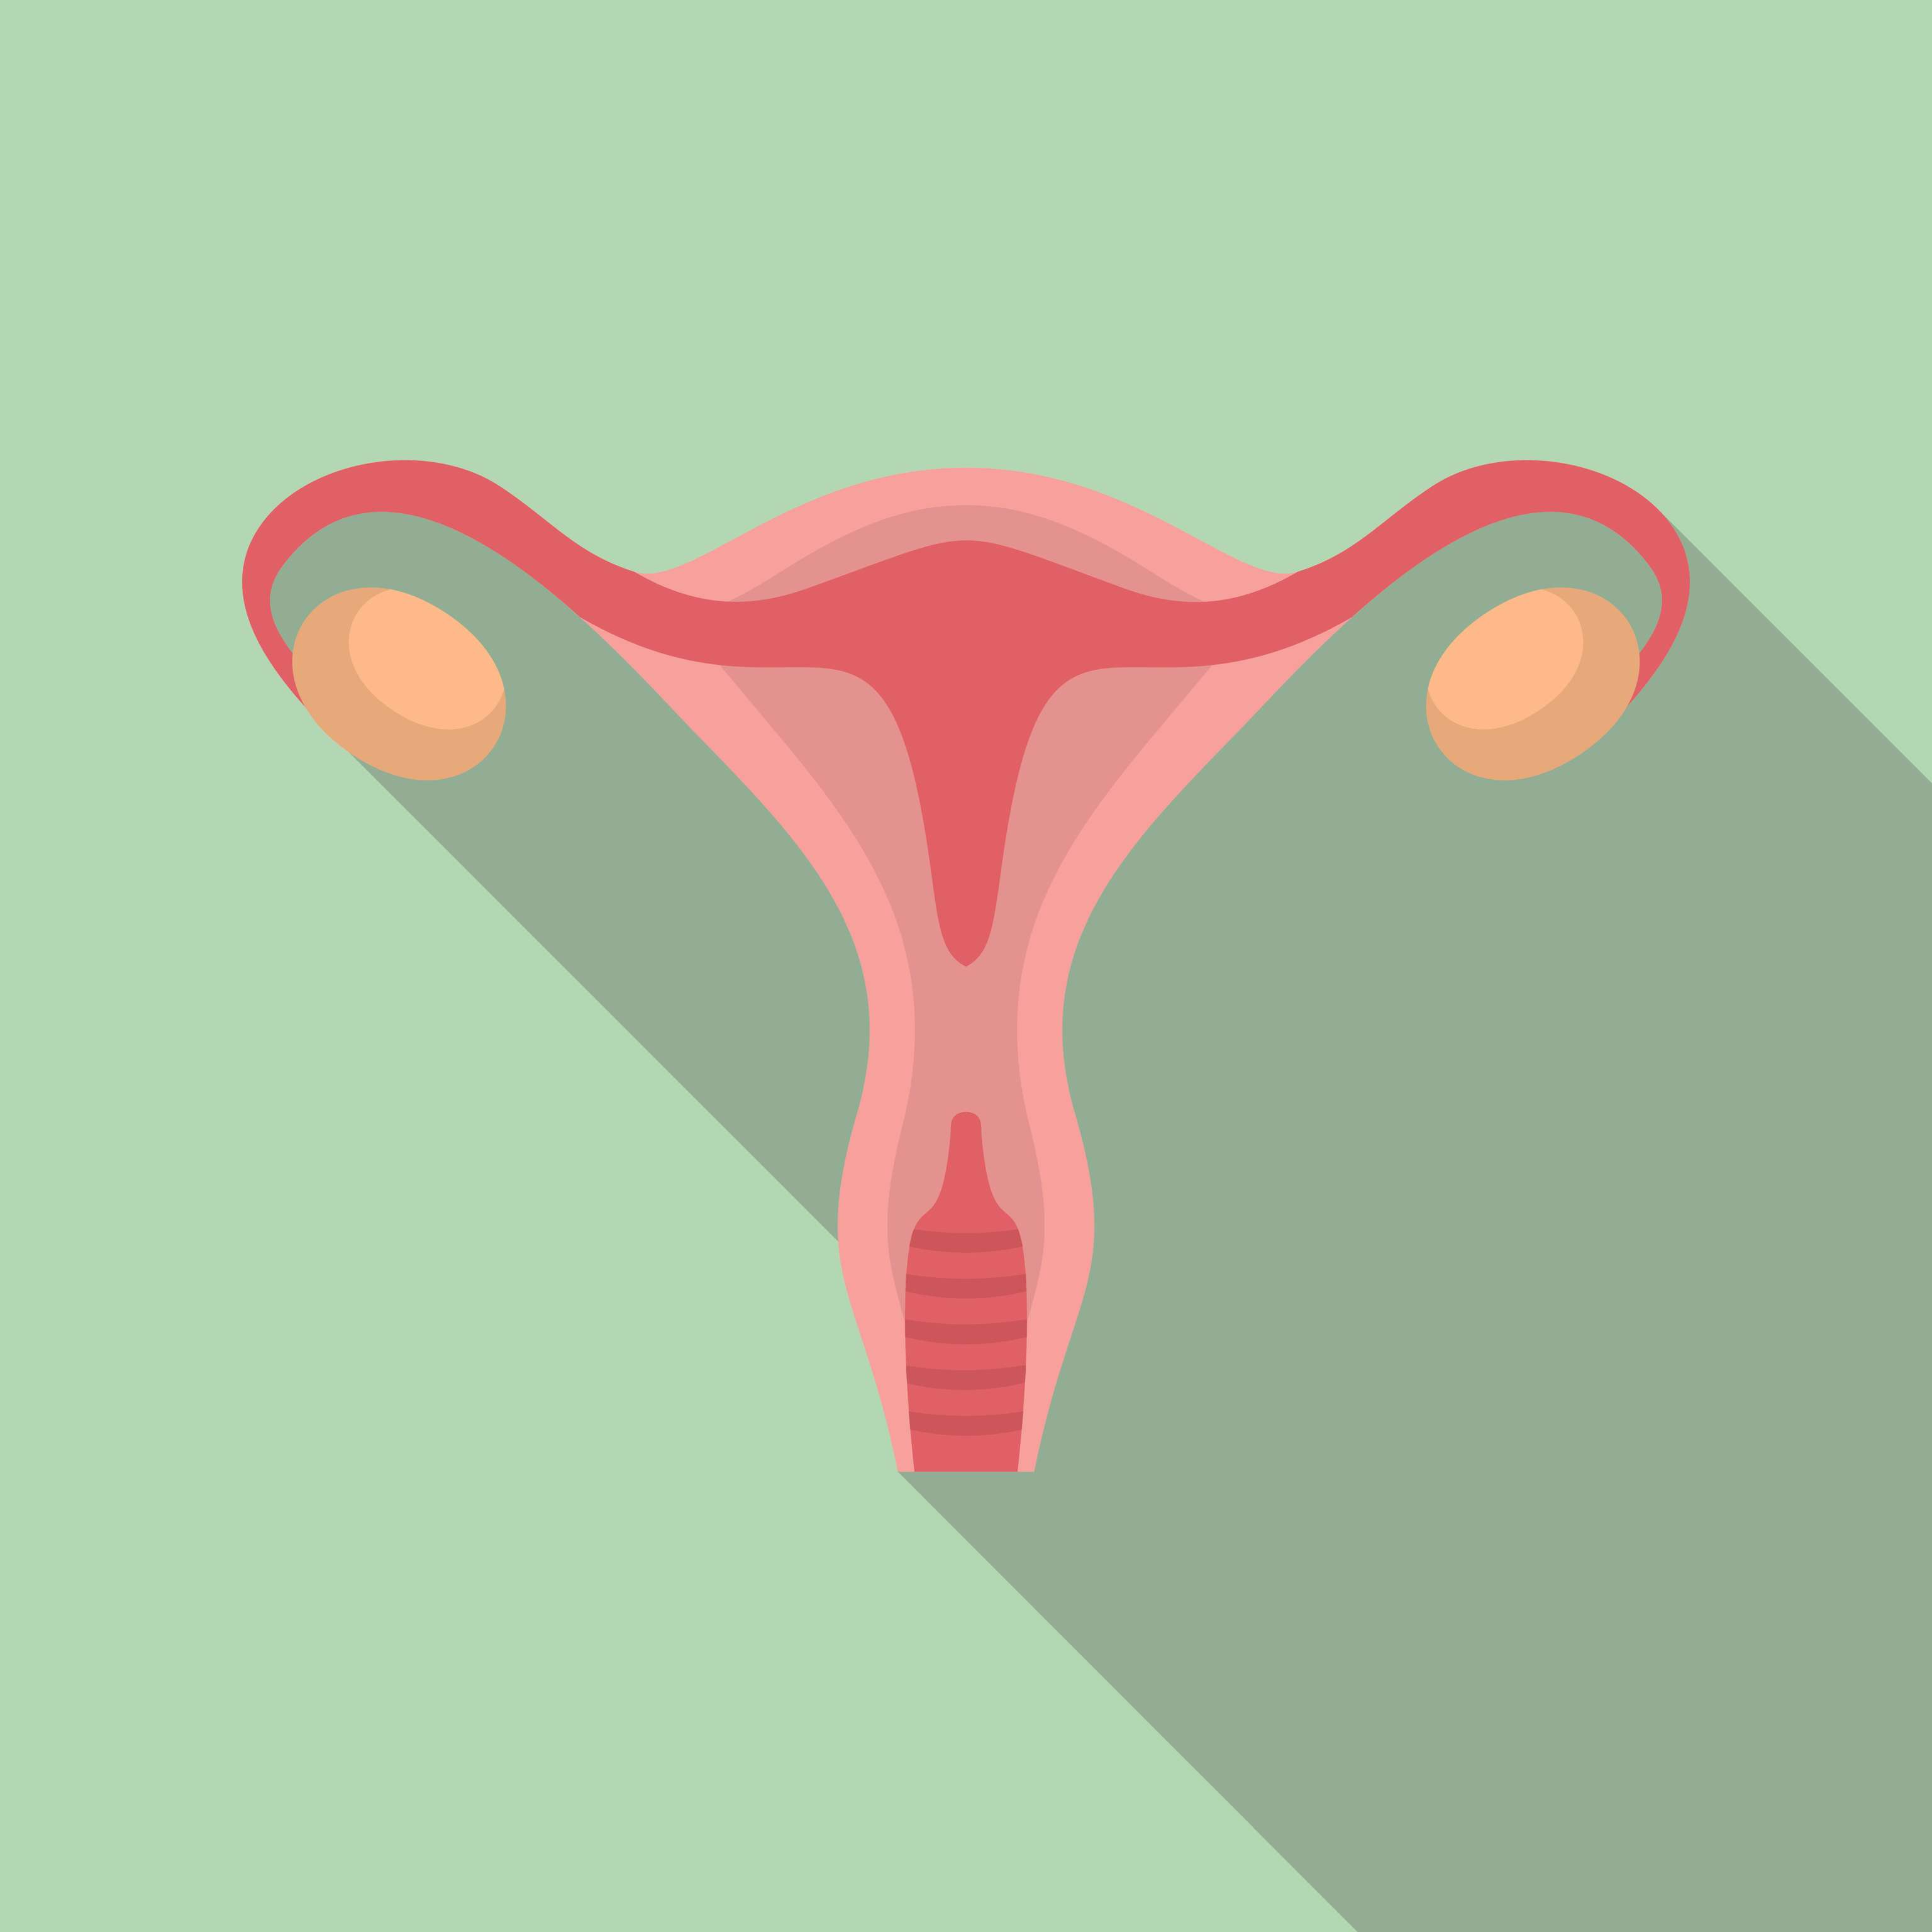 A urine test to detect uterine cancer?